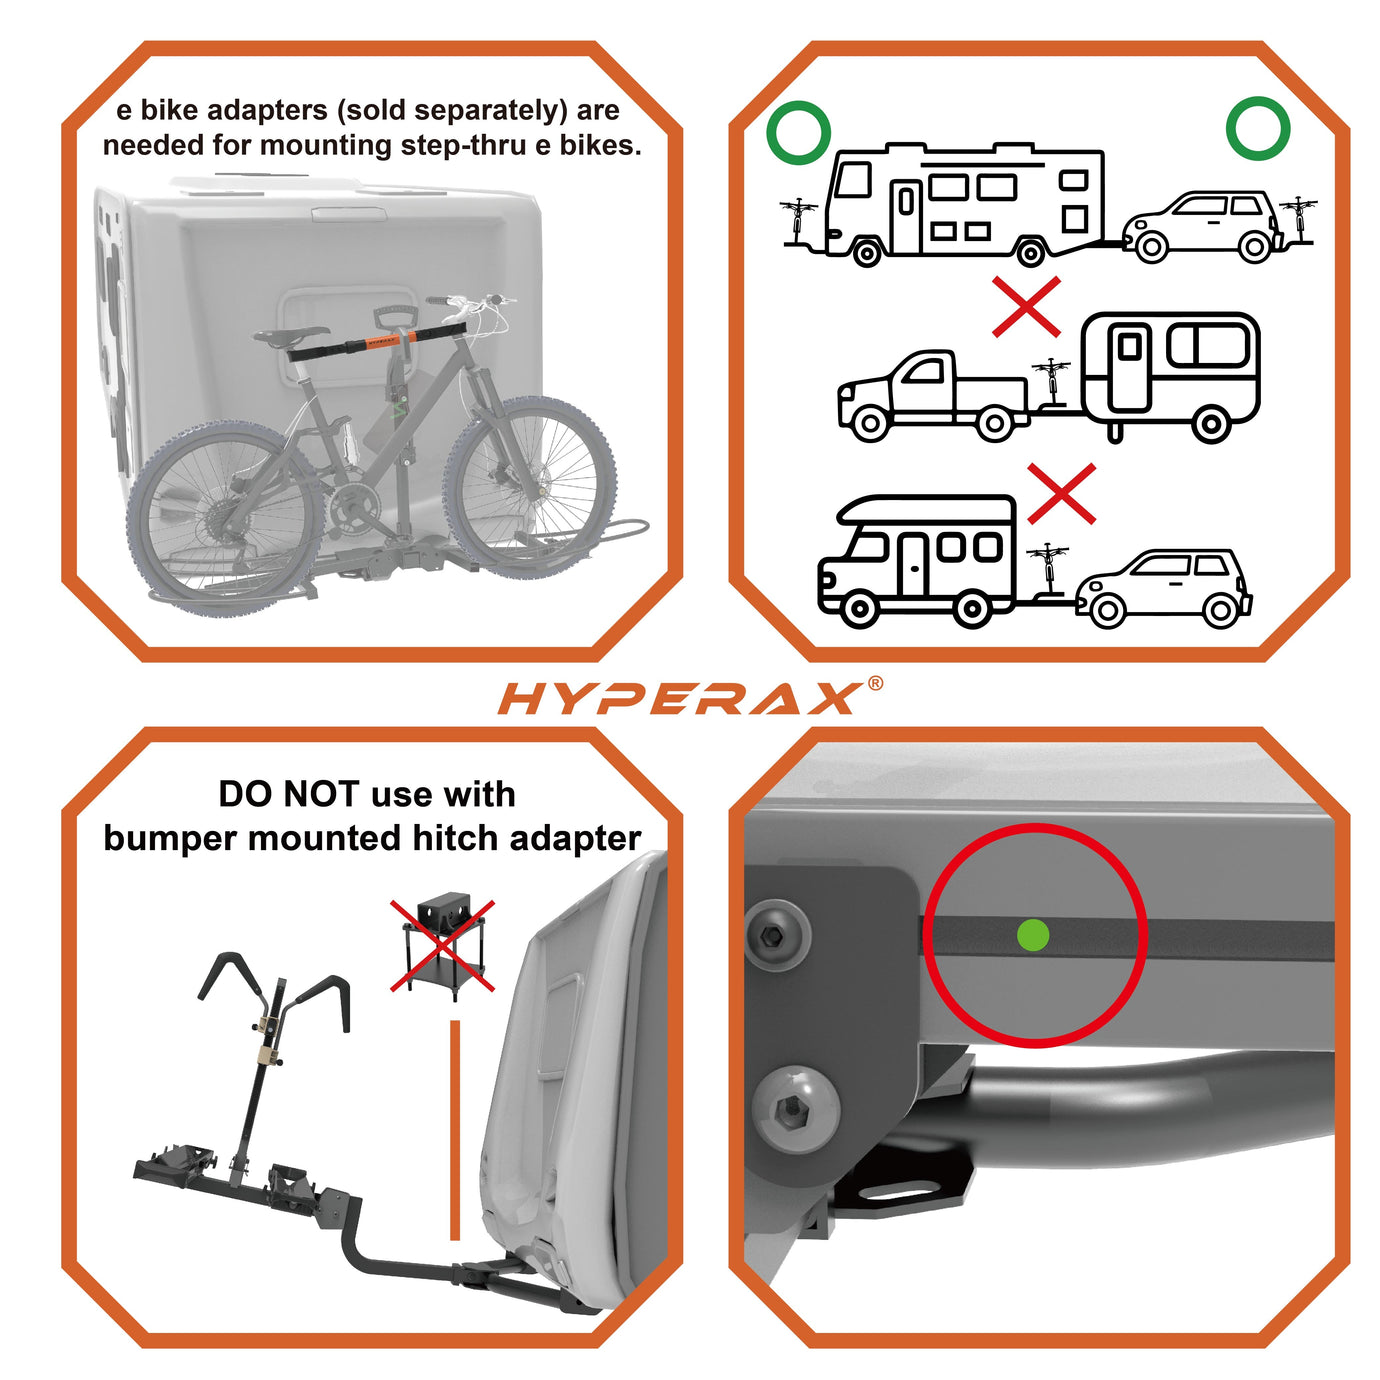 VOLT LIFT COMBO with Step-thru E-bike adapter